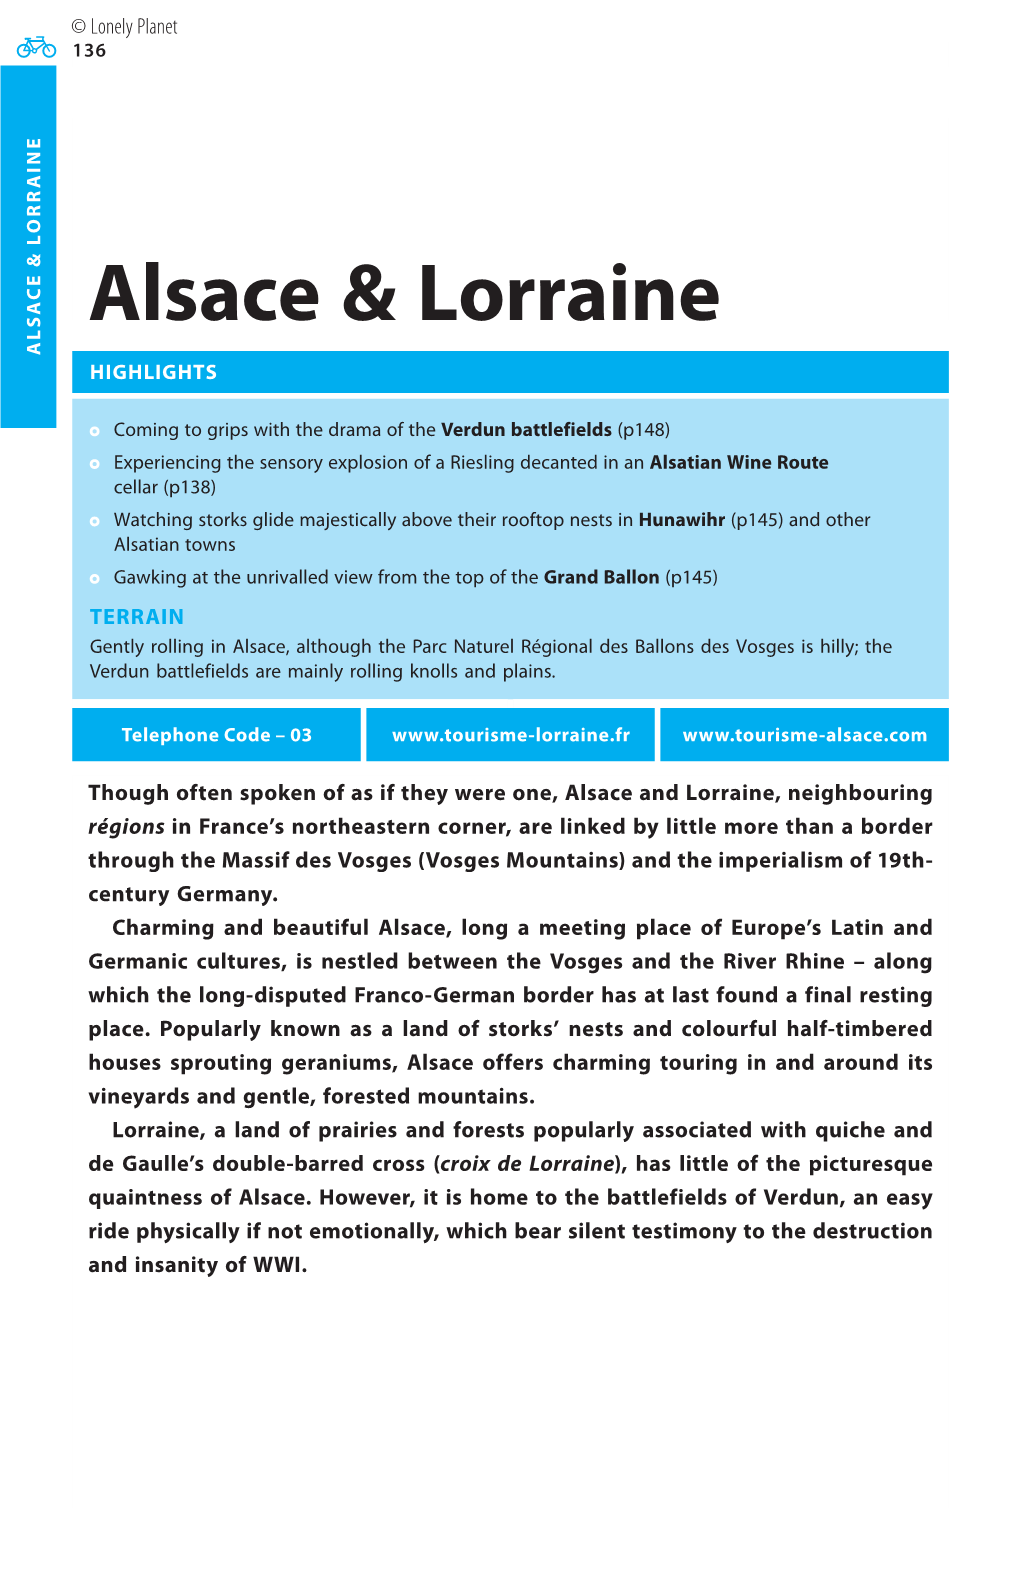 Alsace & Lorraine